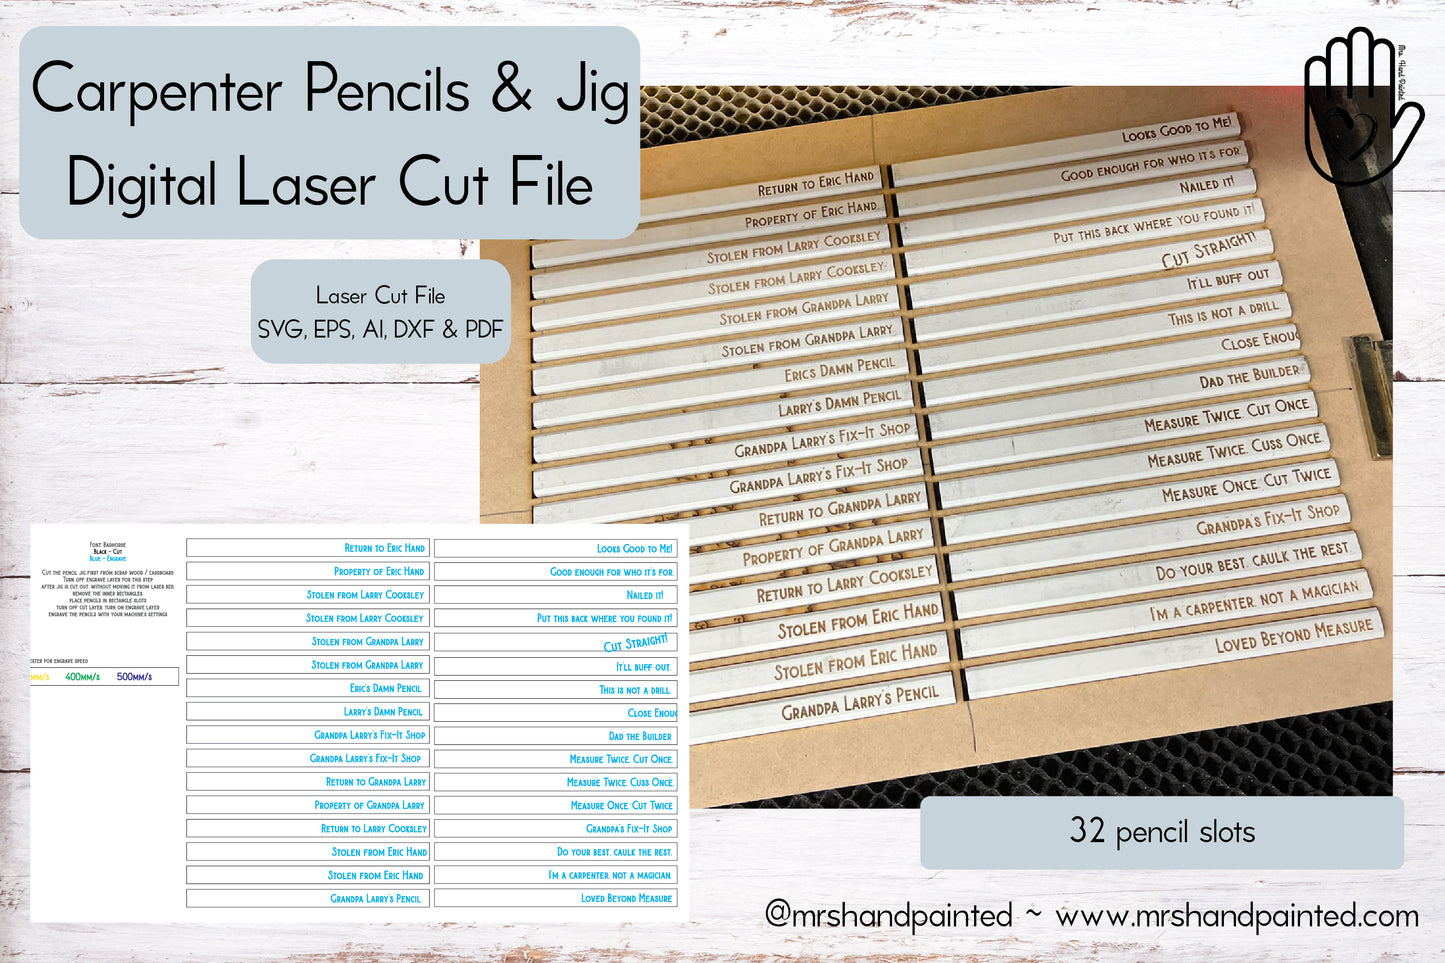 FREE Digital Laser Cut File - Carpenter Pencils & Jig